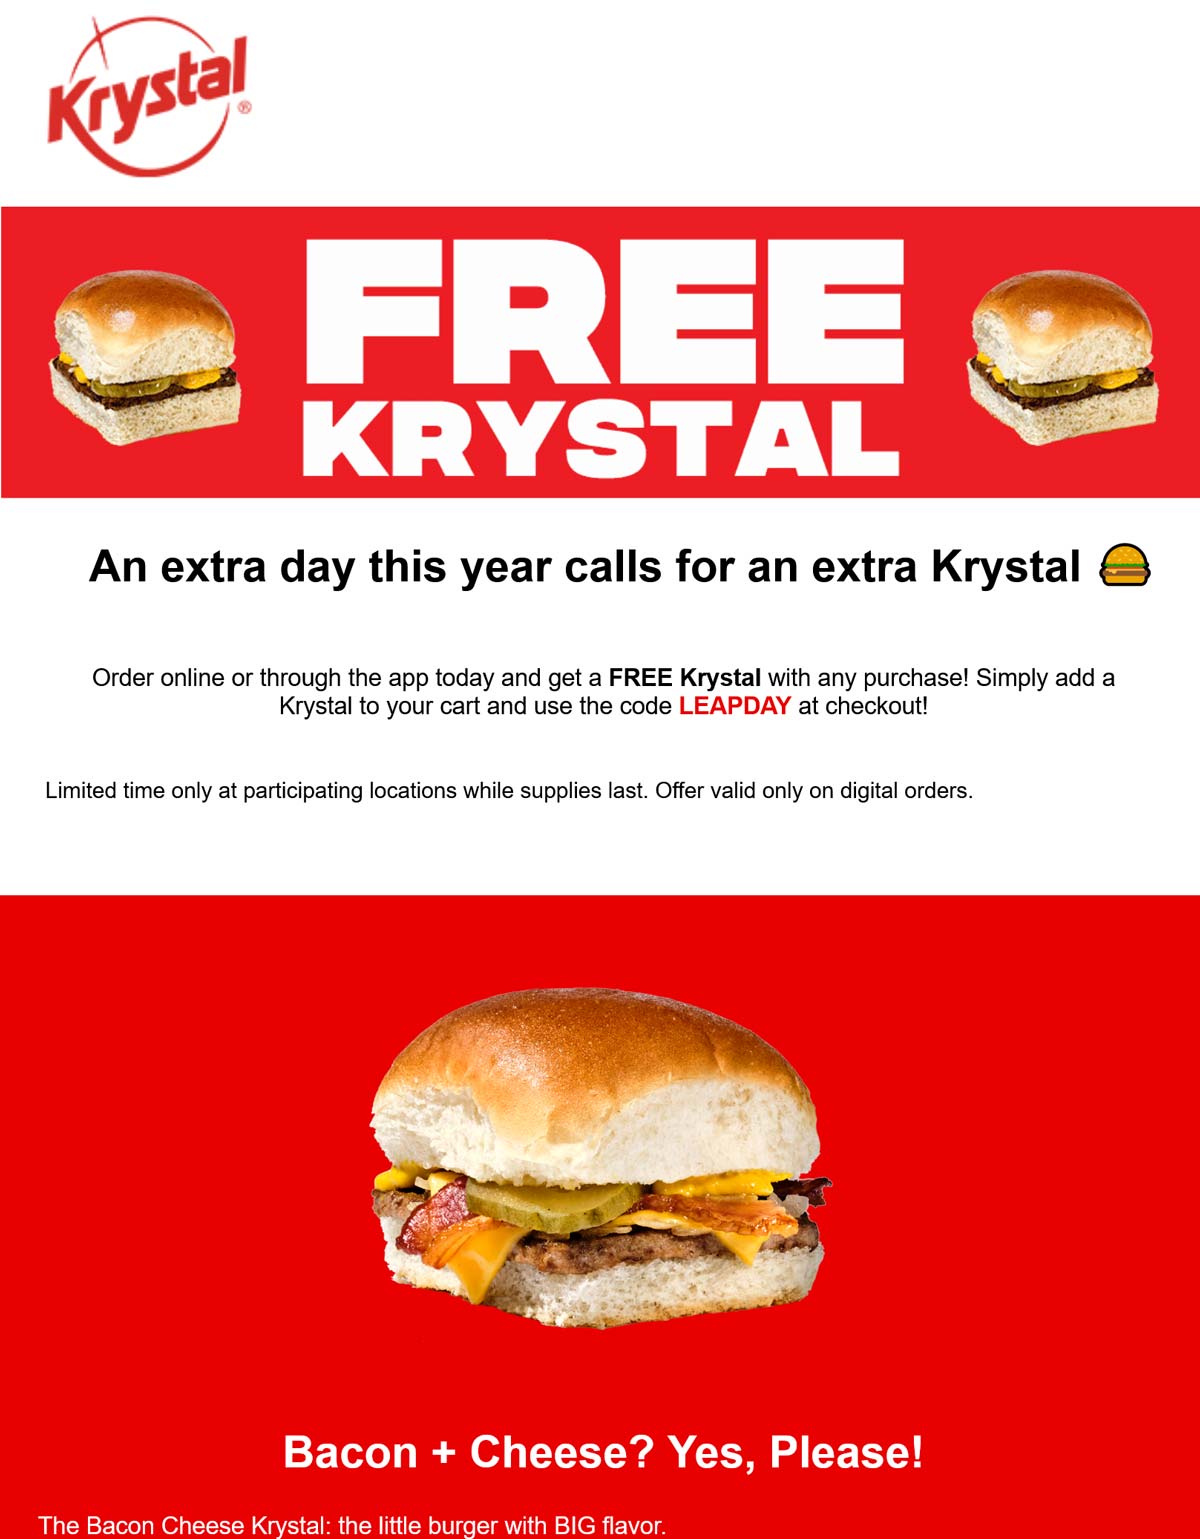 Krystal restaurants Coupon  Free cheeseburger with any order today at Krystal via promo code LEAPDAY #krystal 